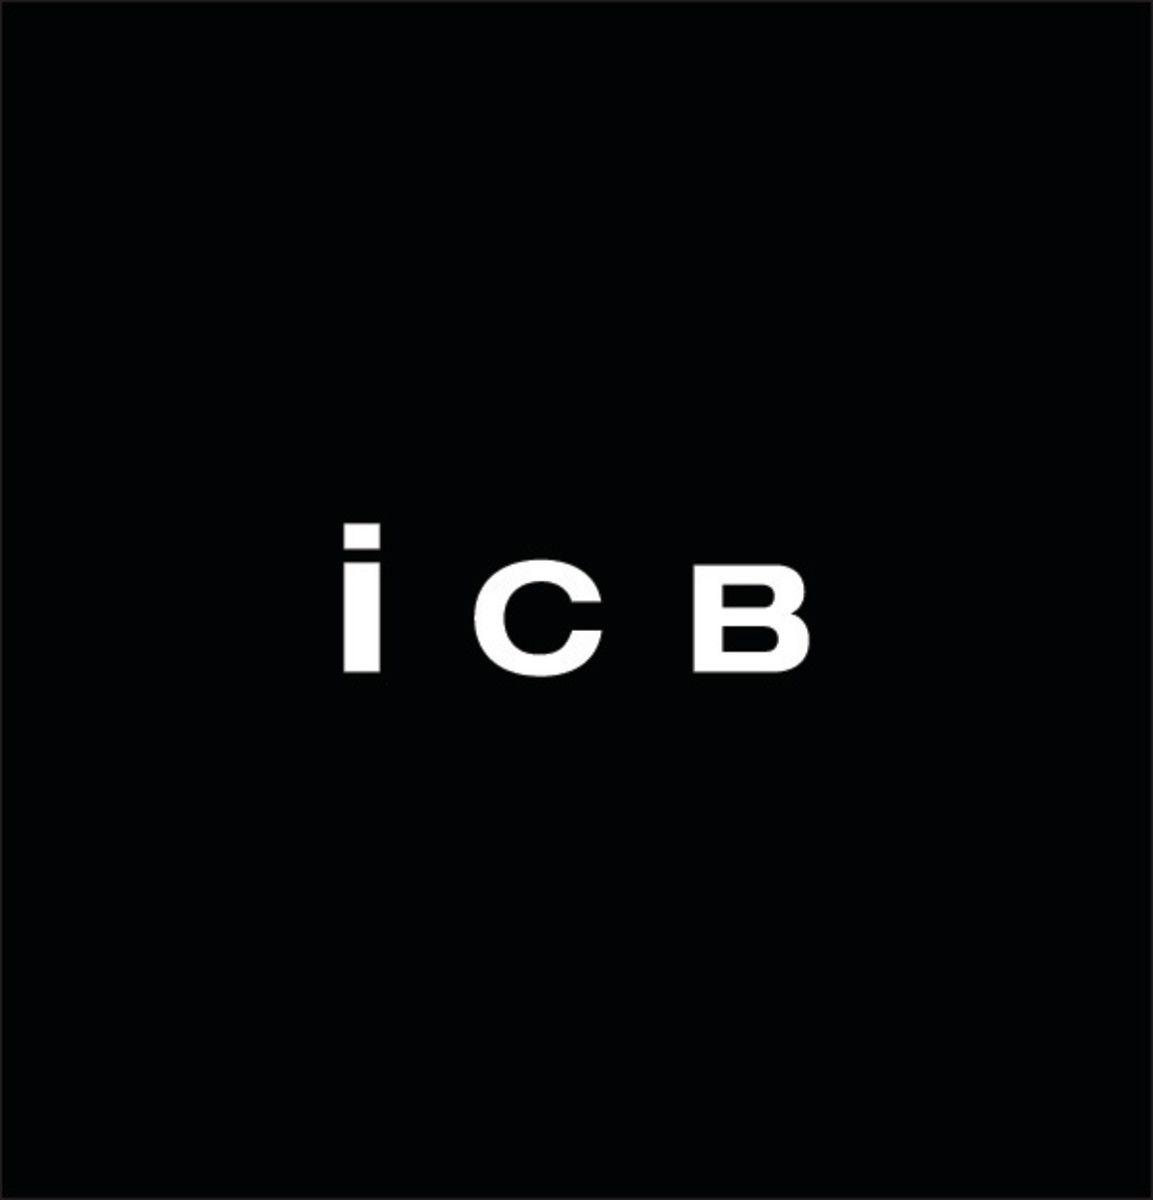 ICB Logo - ICB Is Seeking PR / Marketing Interns In New York, NY